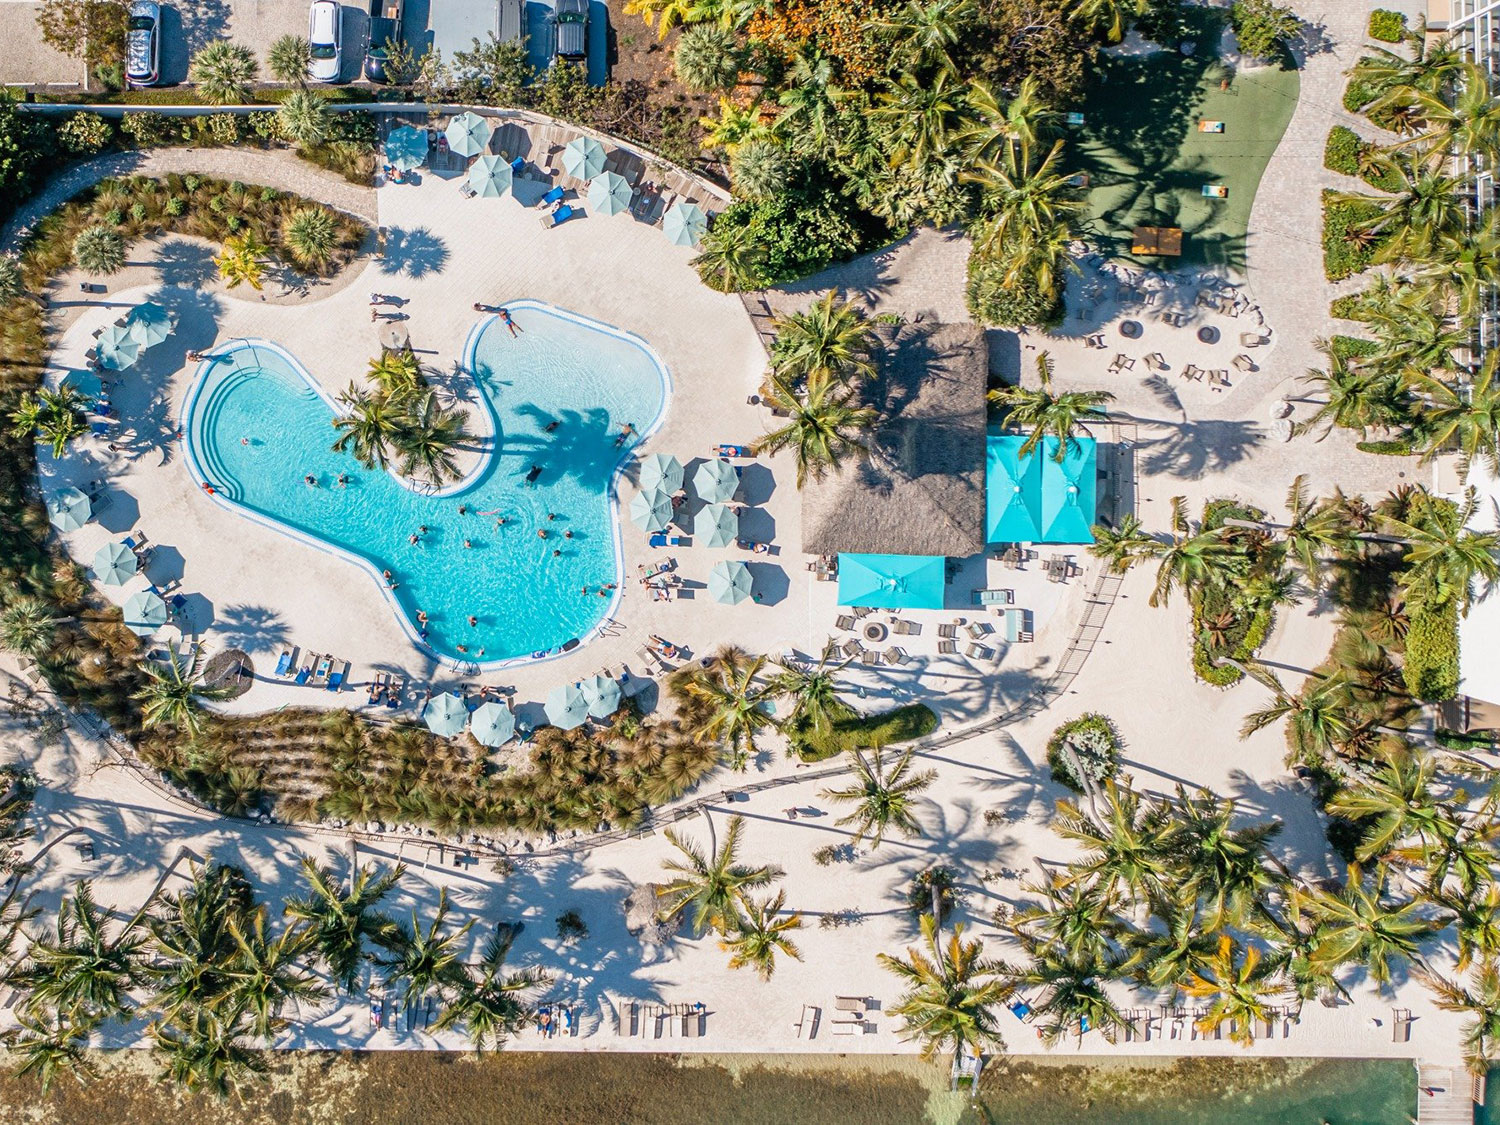 An aerial view of the pool and amenities at Amara Cay Resort in Islamorada, Florida.